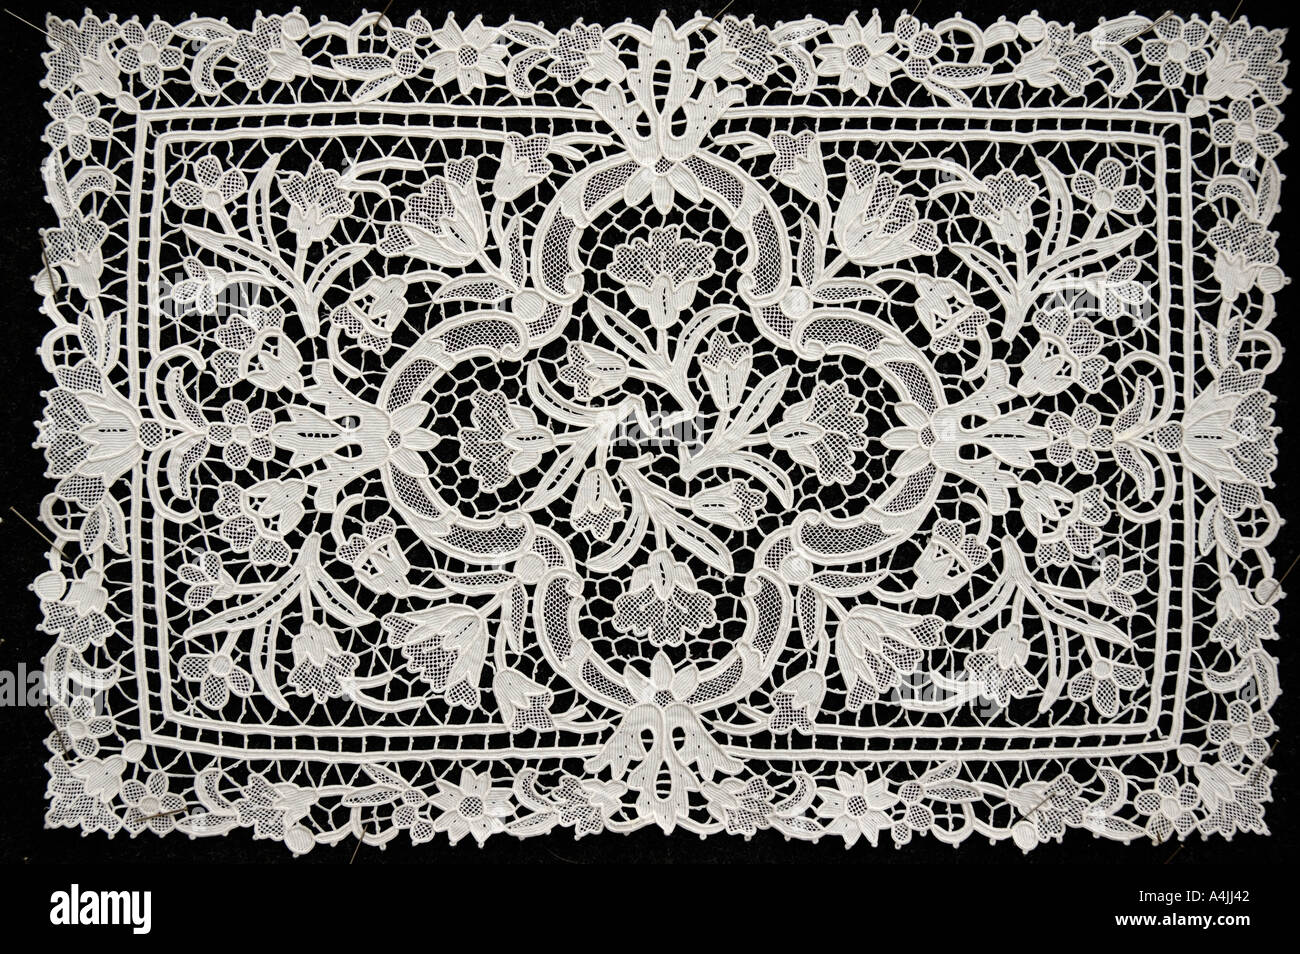 Burano lace on display a dying cultural tradition Venice Venezia Veneto Italy Europe EU Mediterranean Stock Photo